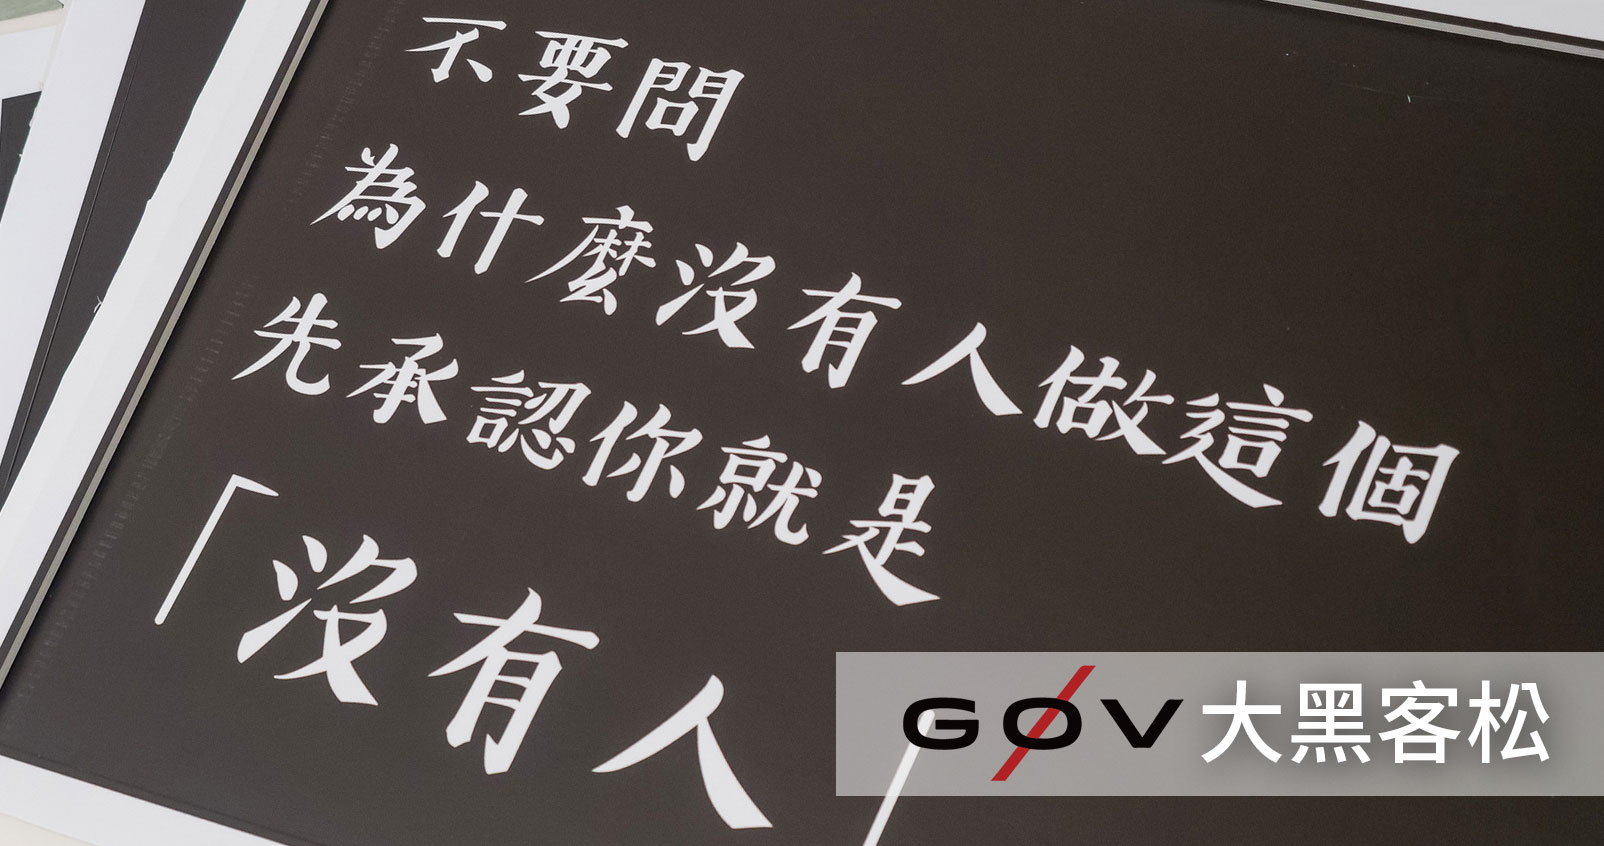 Visual identity image for 'g0v 雙月定期大黑客松'